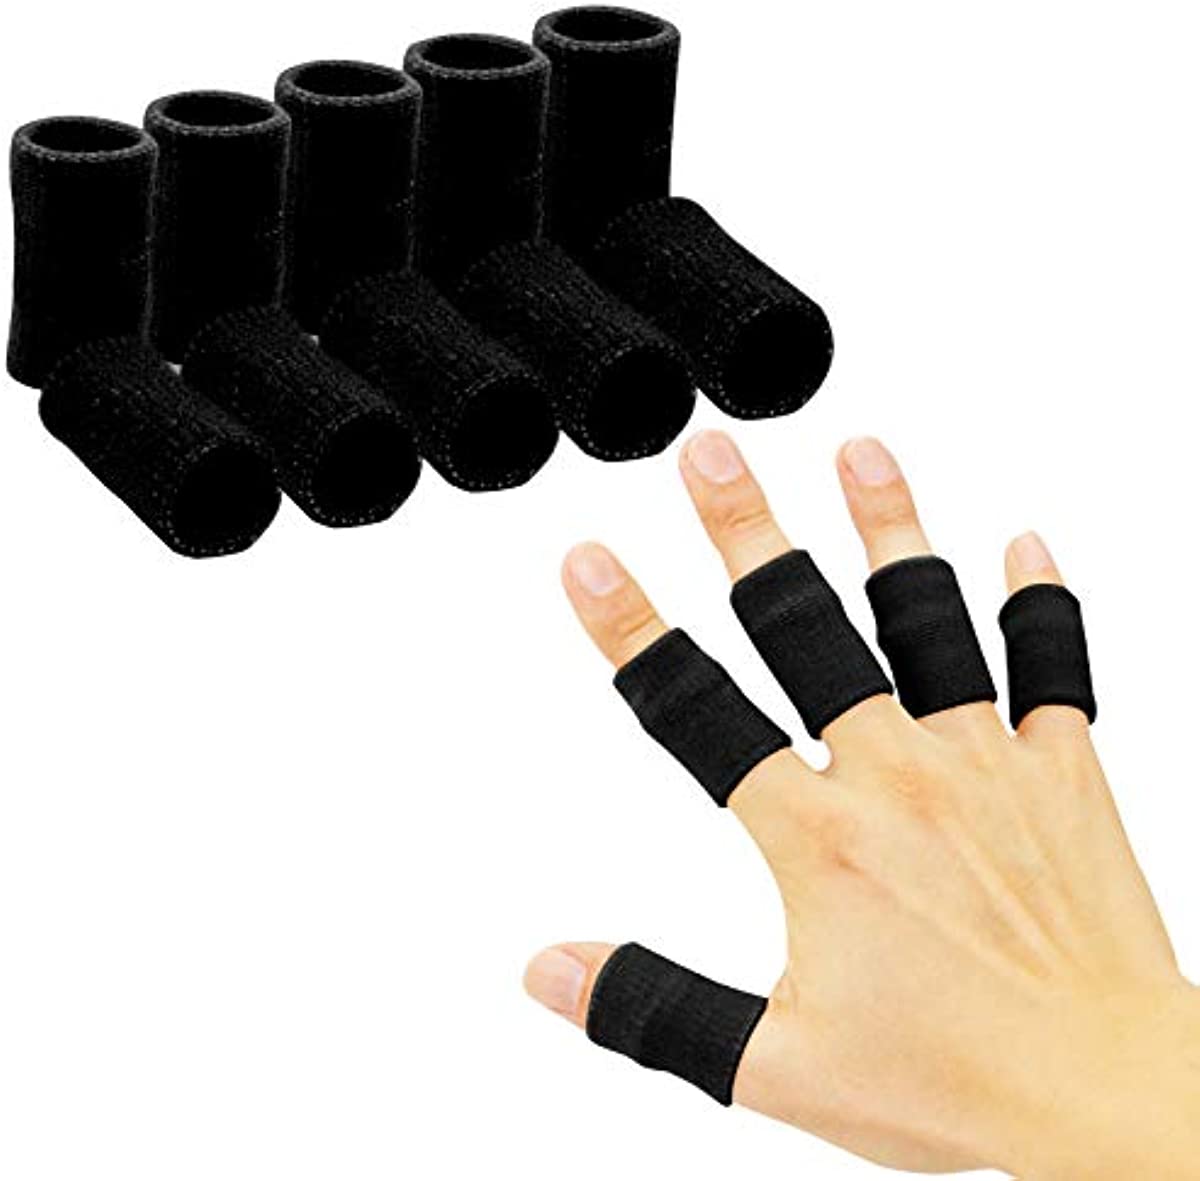 Finger Sleeves , Thumb Splint Brace For Finger Support, Breathable Elastic Finger tape, Compression pression Protector For Reliving Pain, Triggger Finger, Compression Aid For Sports, 10PCS (black)